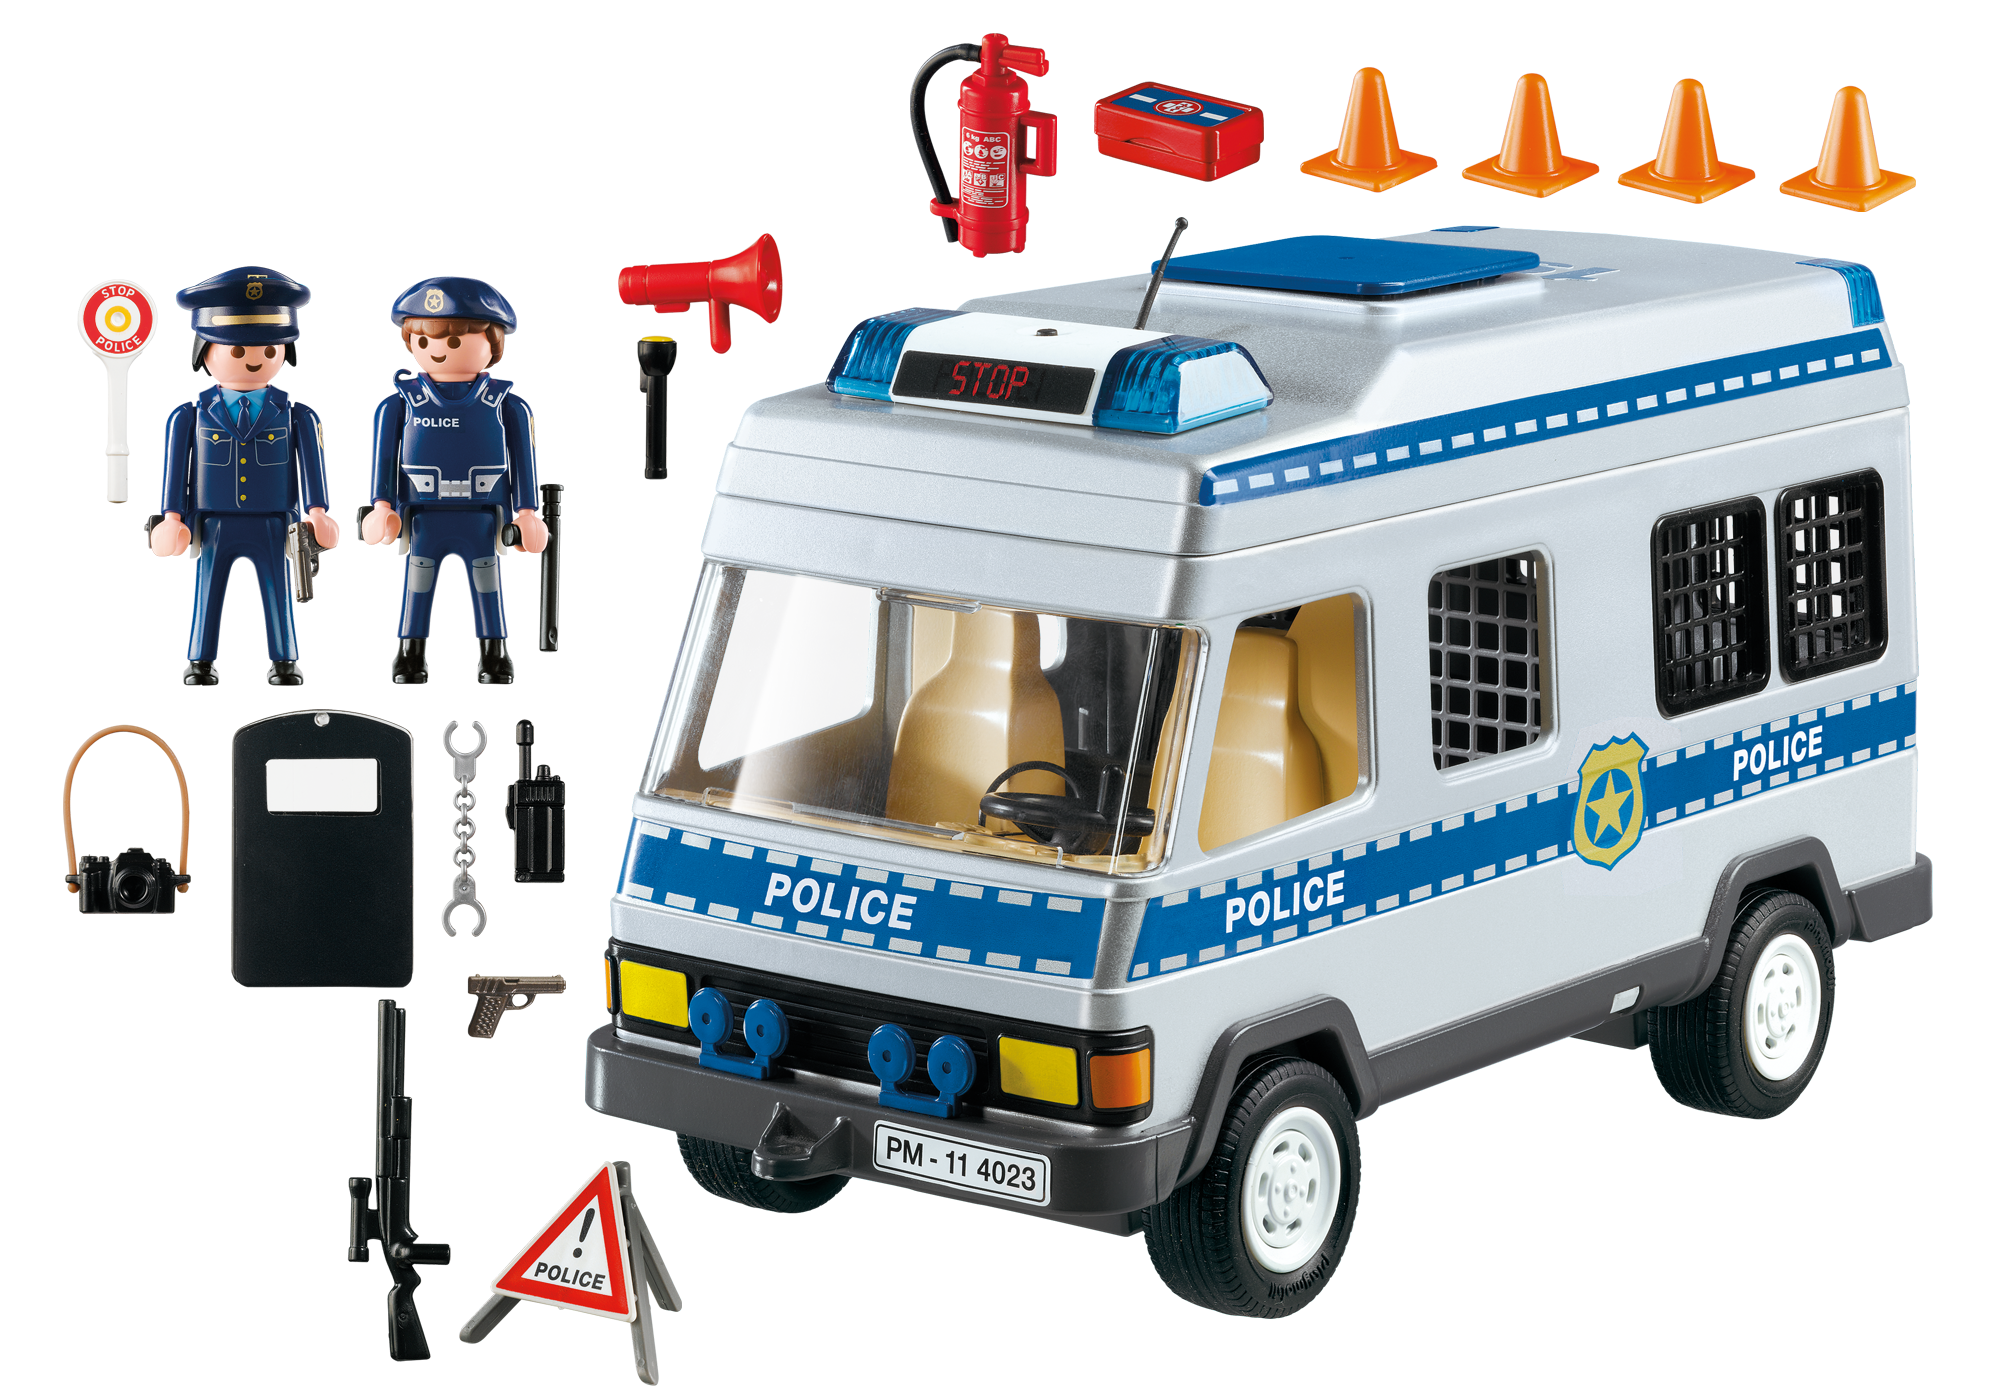 playmobil police riot van